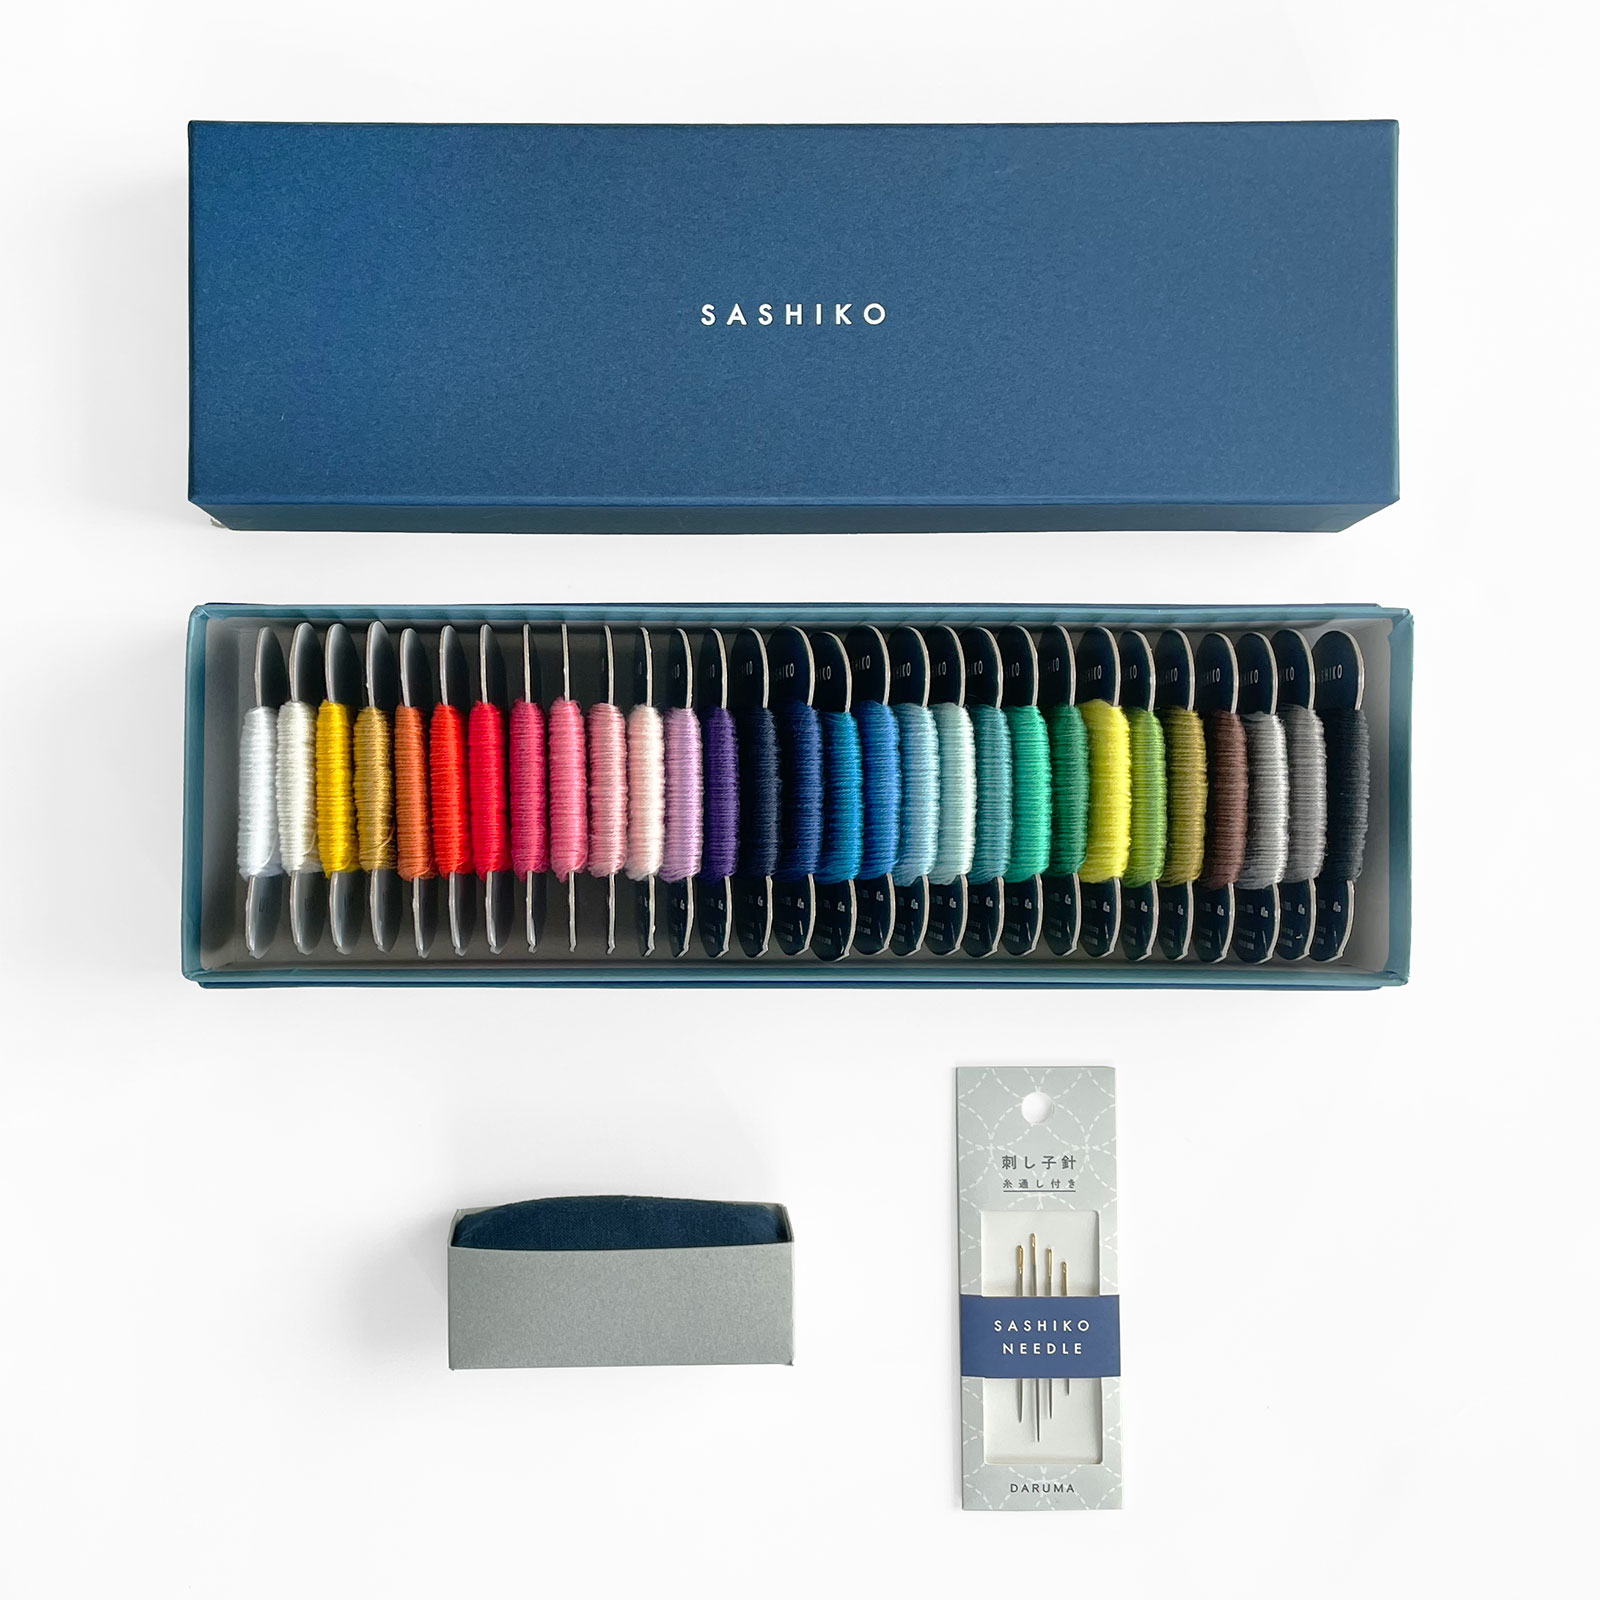 Daruma - Carded Variegated Sashiko Thread - 20/4 - Various Colors